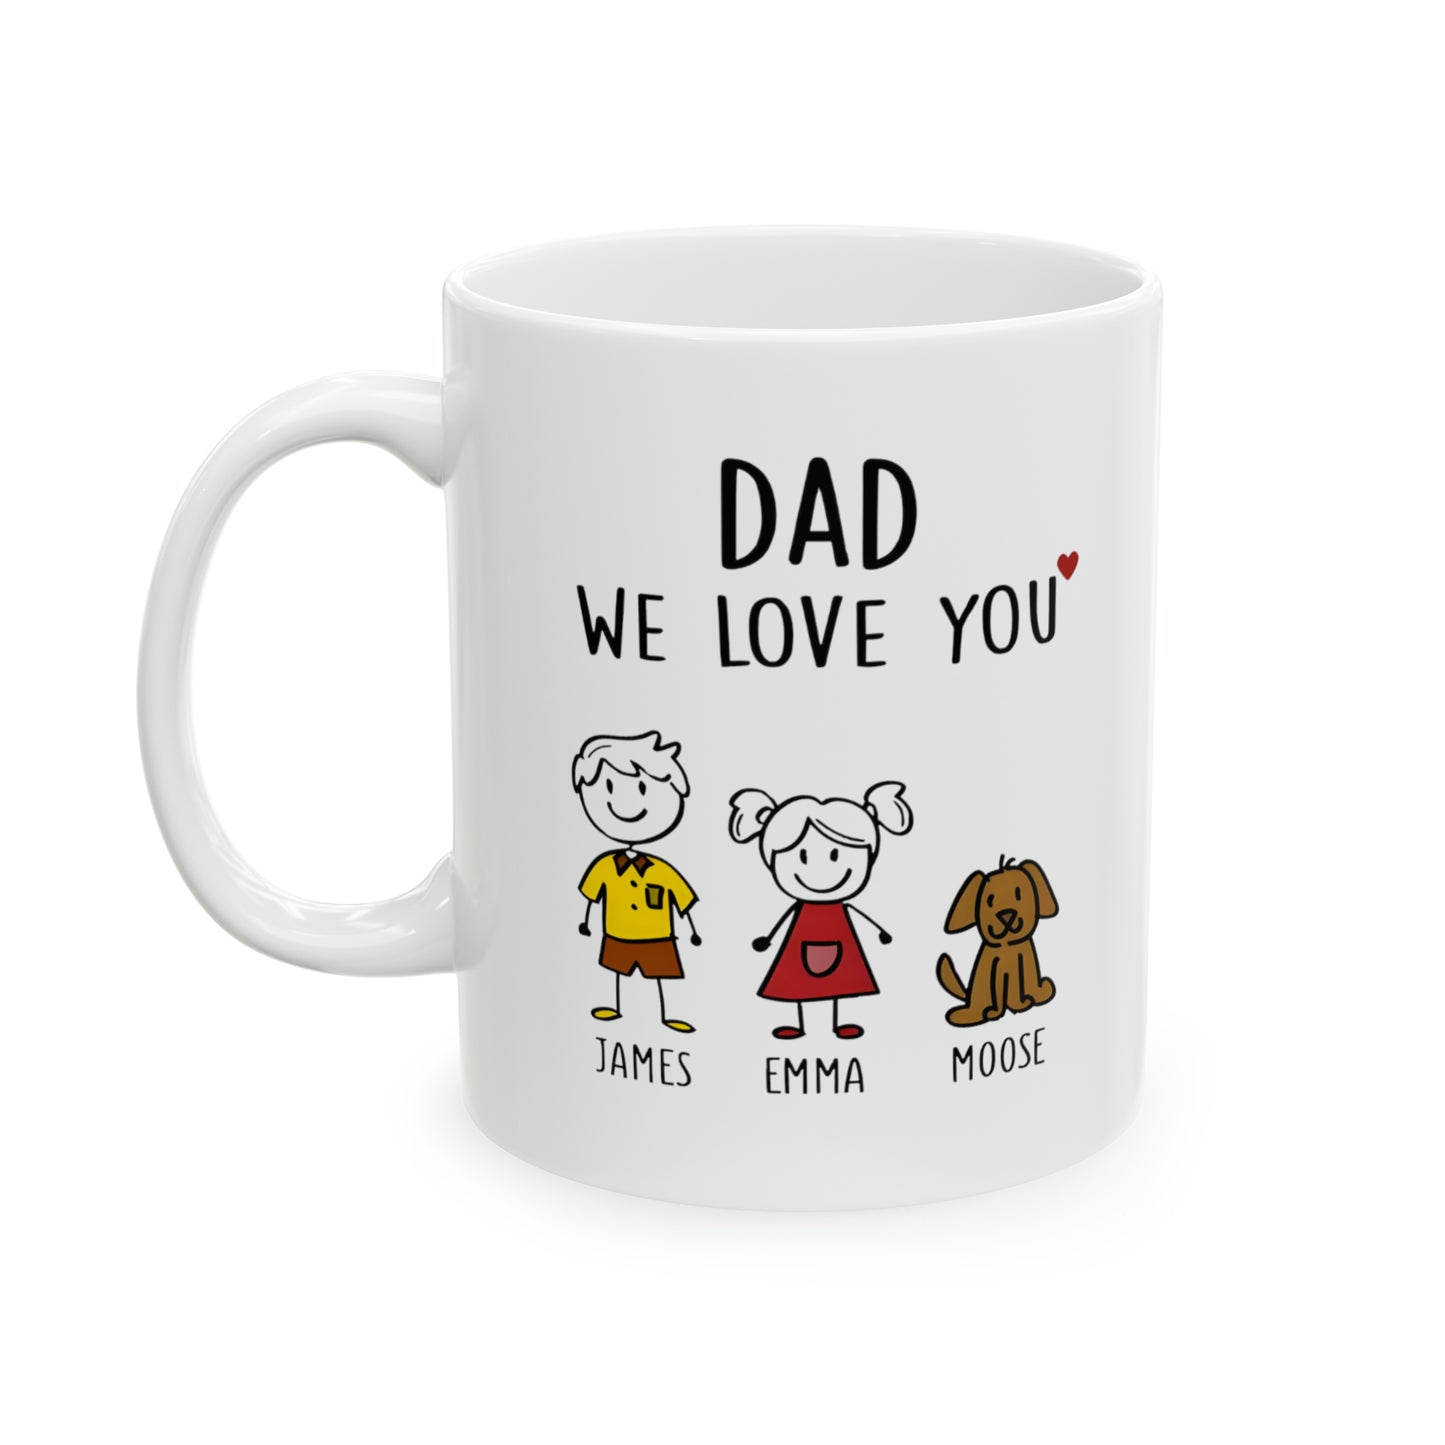 Dad We Love You Custom Printed Mug, Father's Day Gift